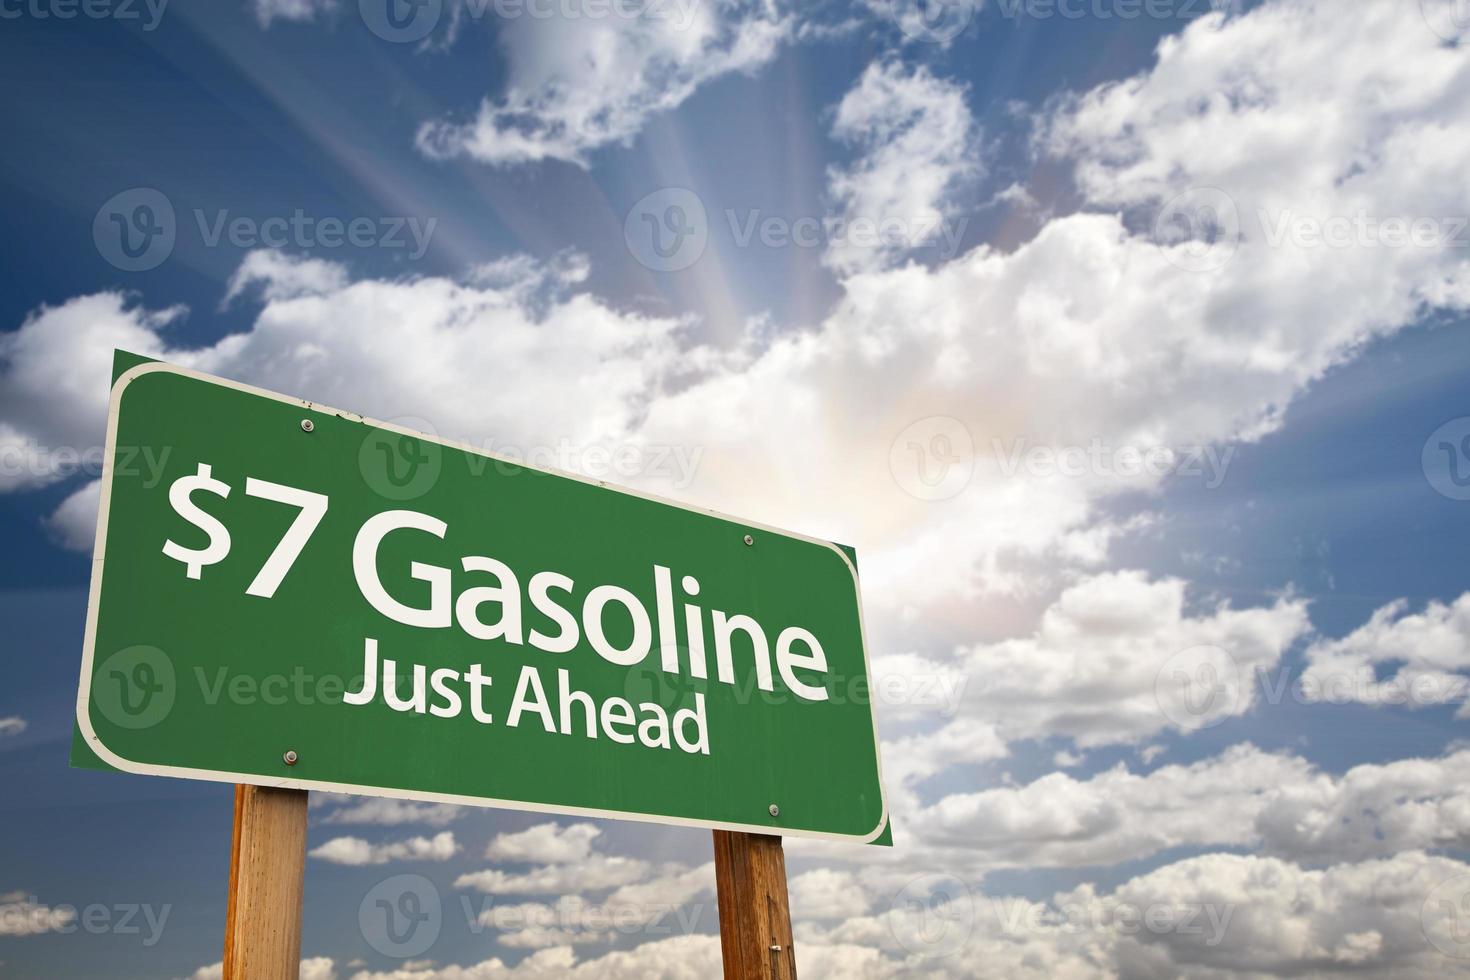 7 benzina verde strada cartello e nuvole foto